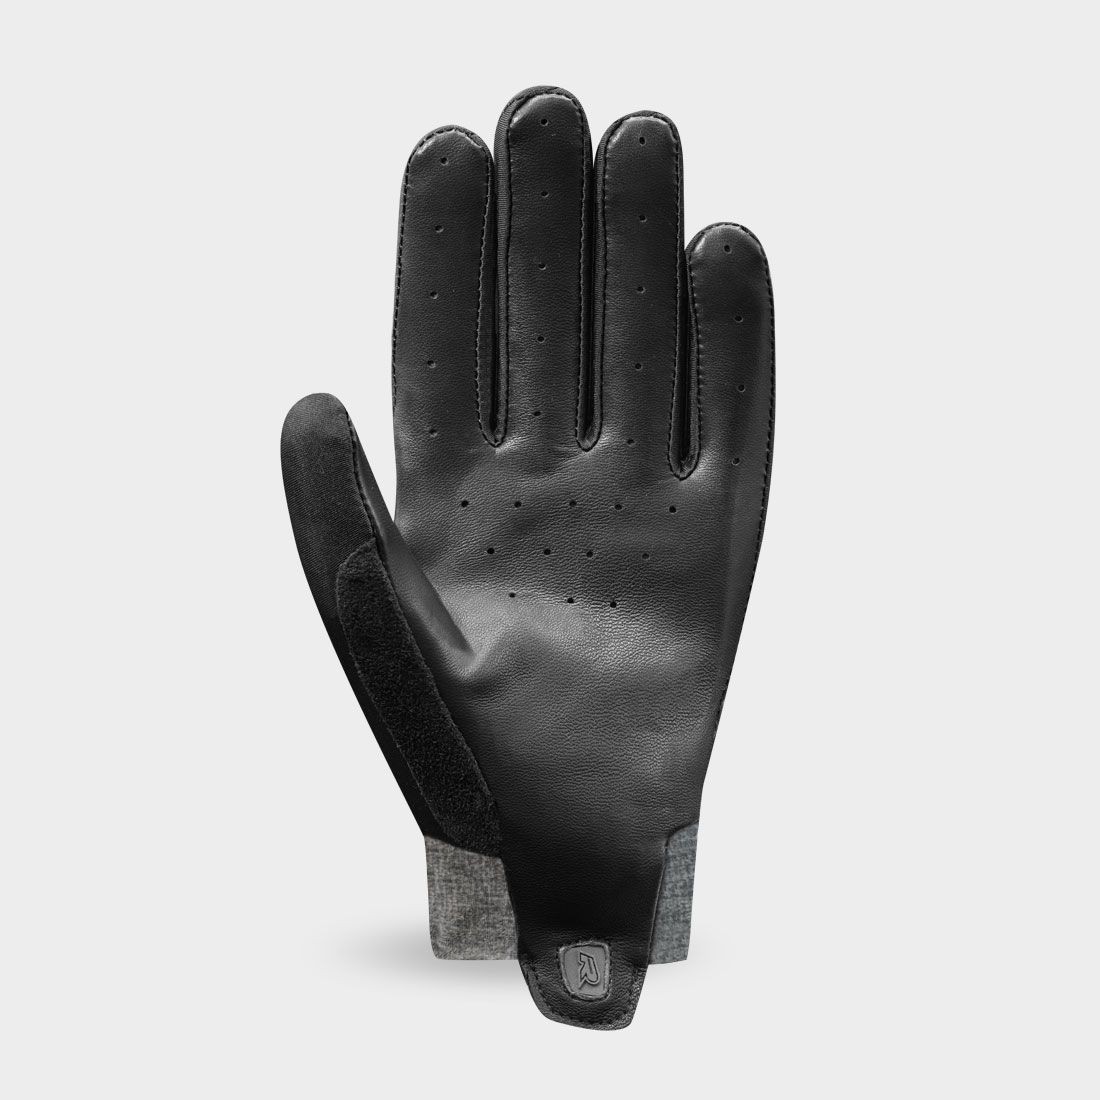 RACER GLOVES - Leather bike gloves FACTORY